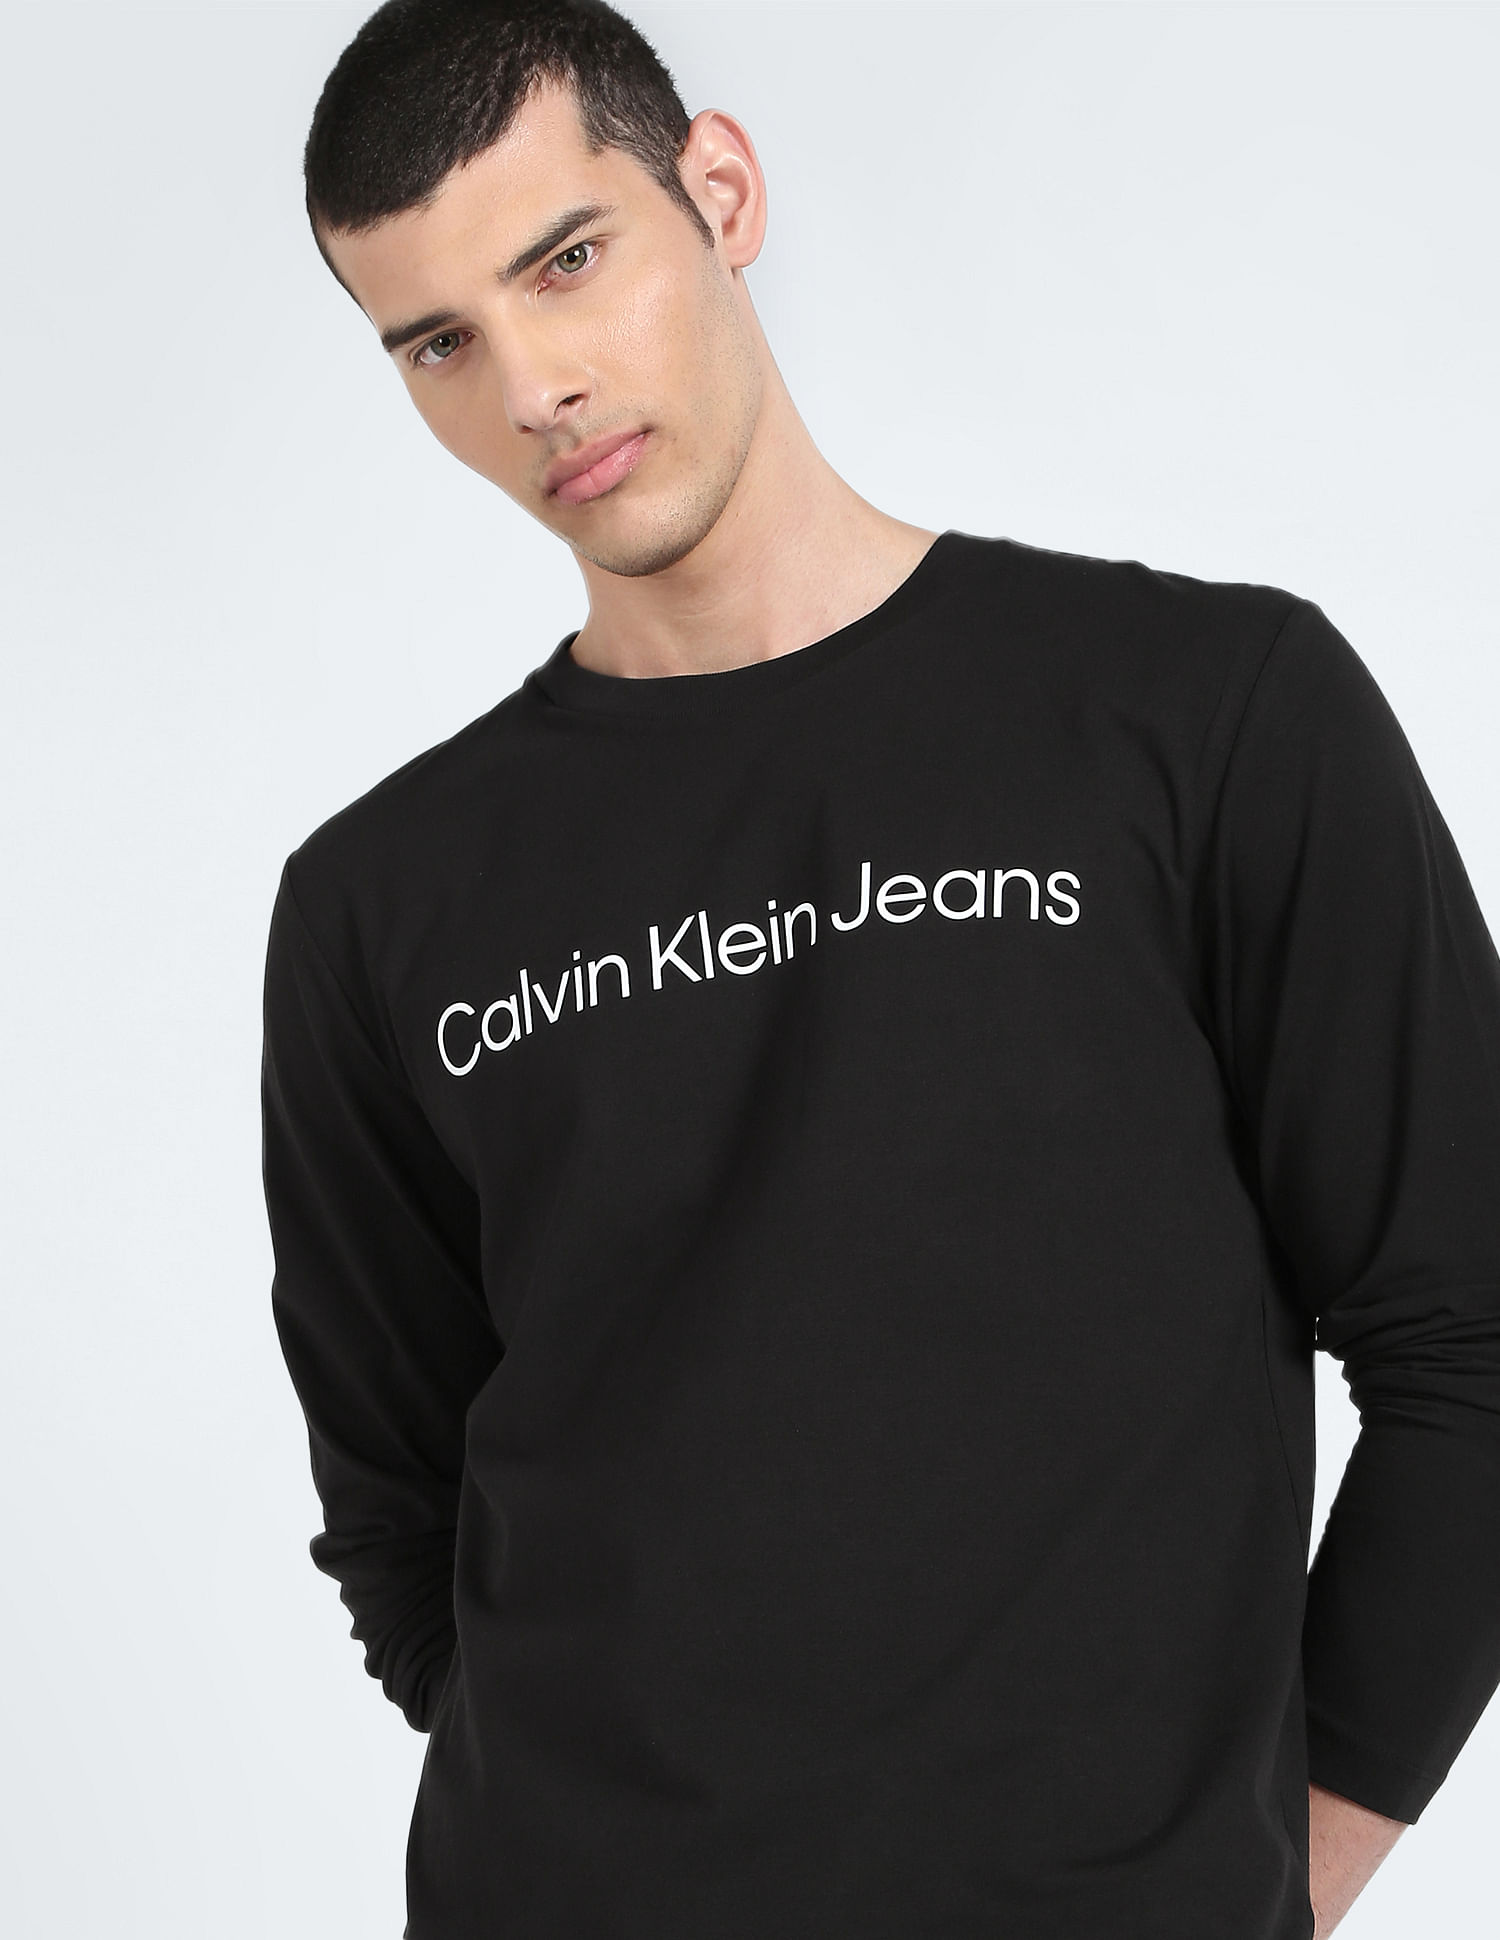 Logo T-Shirt Instil Jeans Buy Calvin Cotton Klein Neck Crew